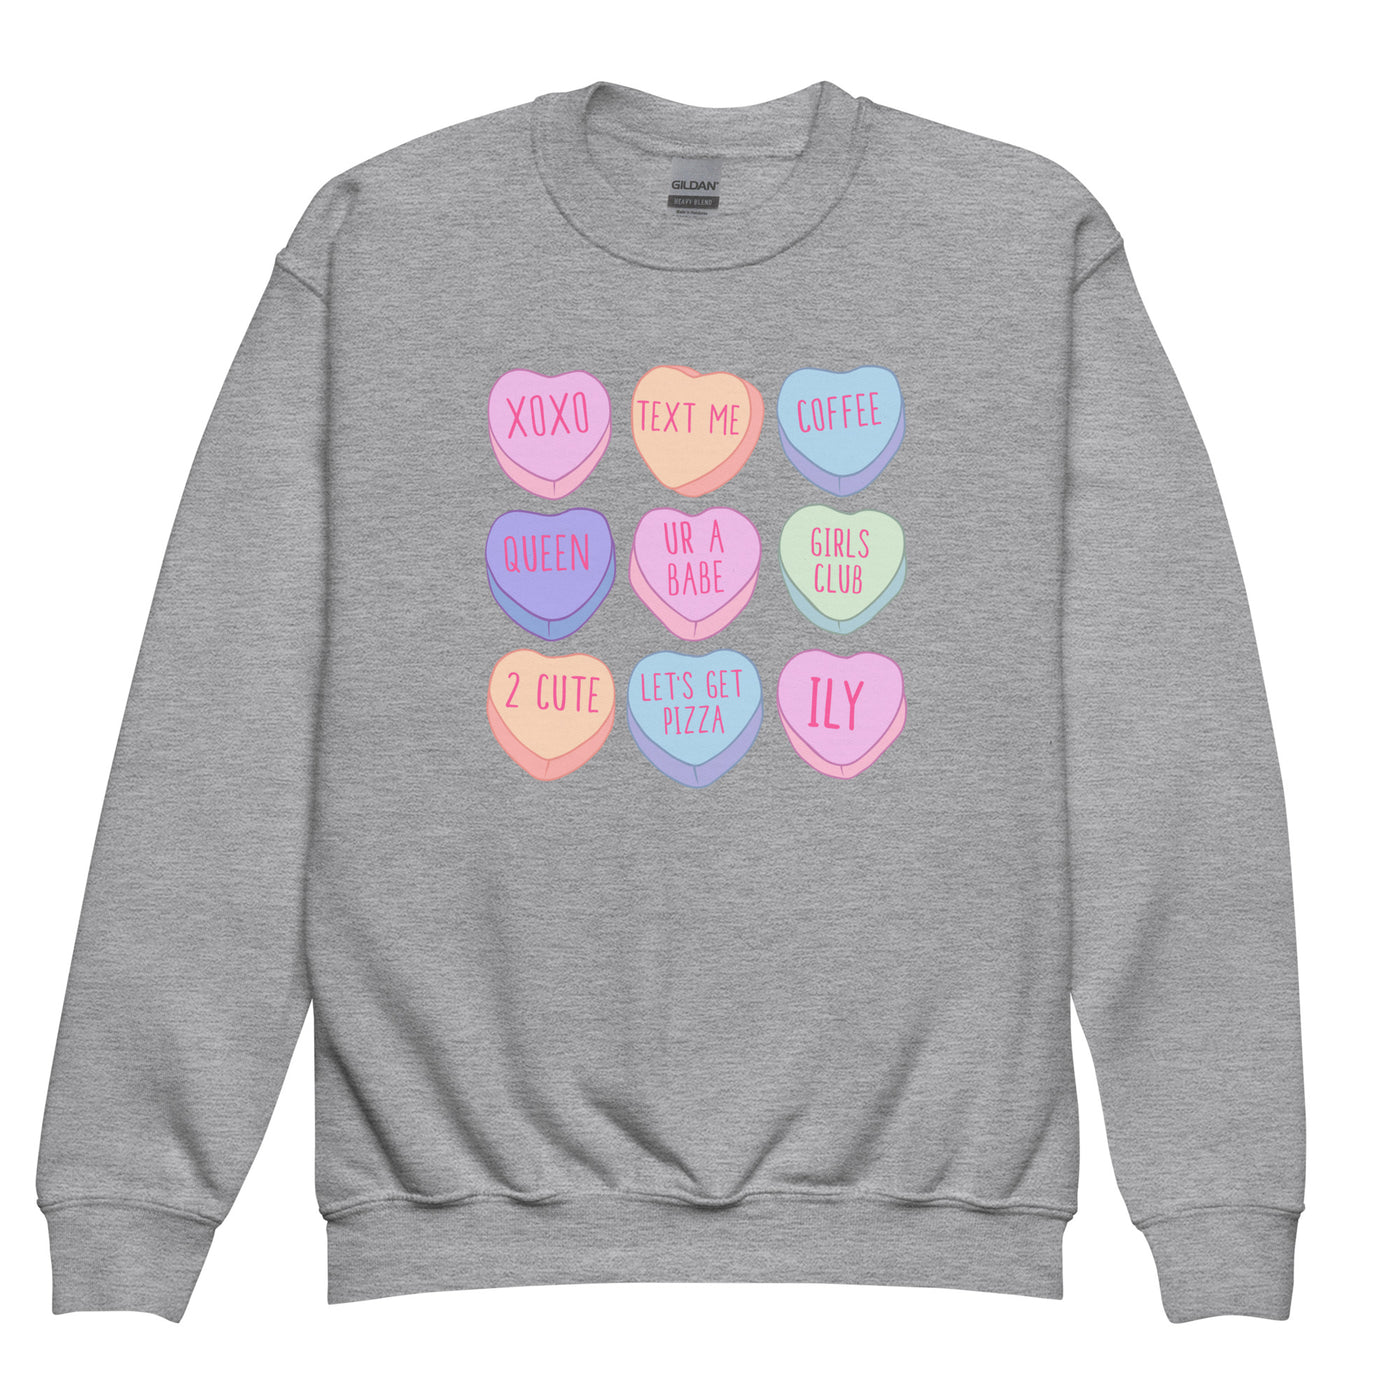 Kids Monogrammed 'Candy Hearts' Crewneck Sweatshirt